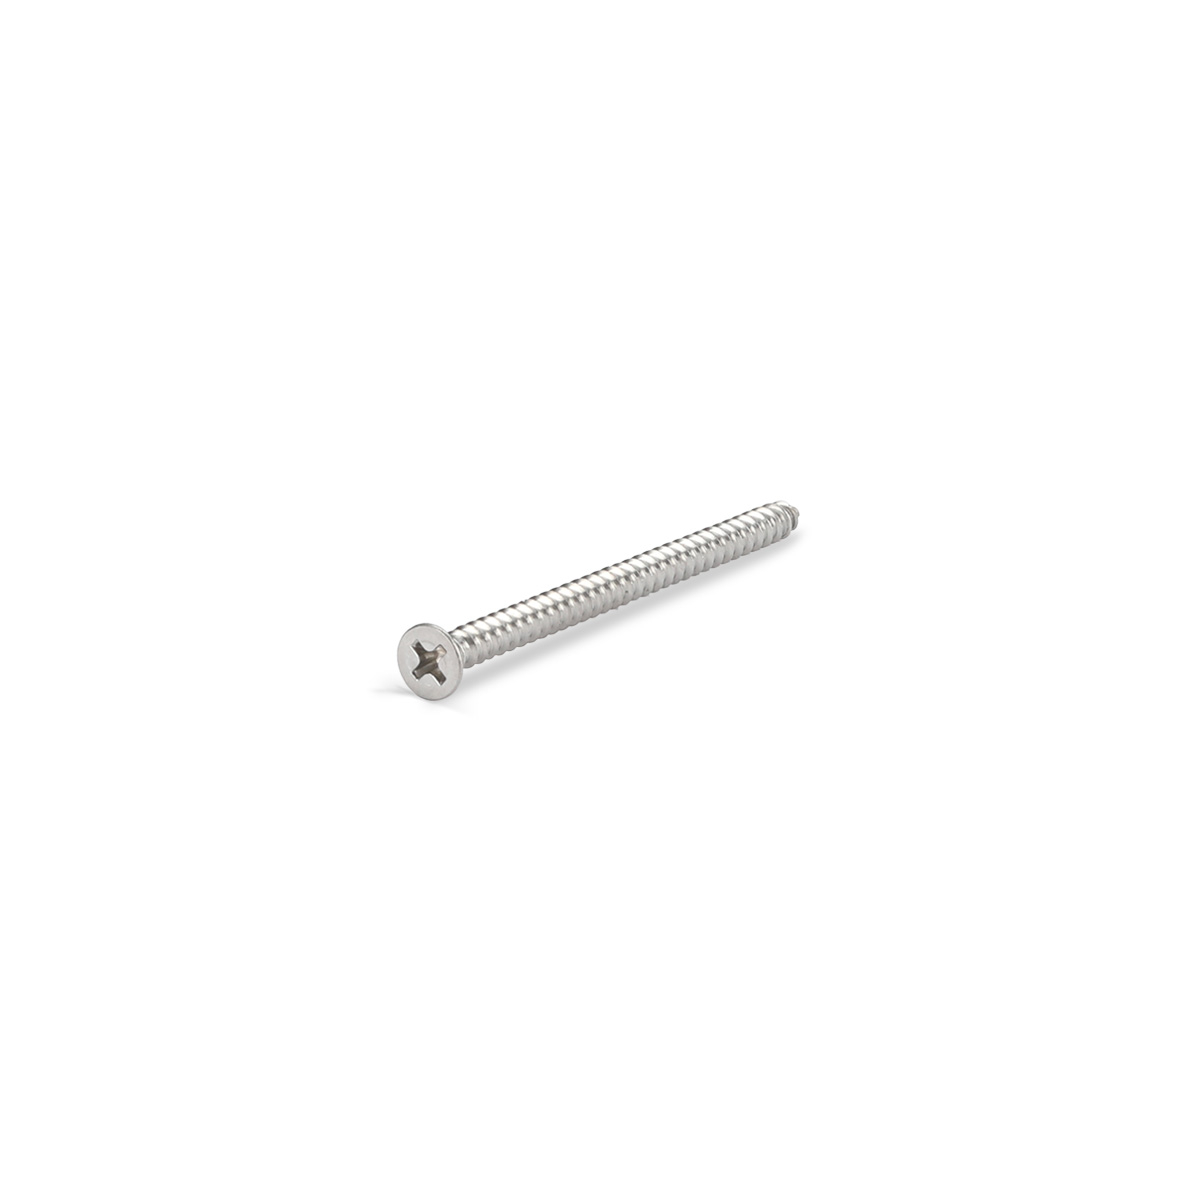 Sheet metal screws, Self tapping, Phillips flat head, Stainless steel 18-8, #8 x 2-1/2